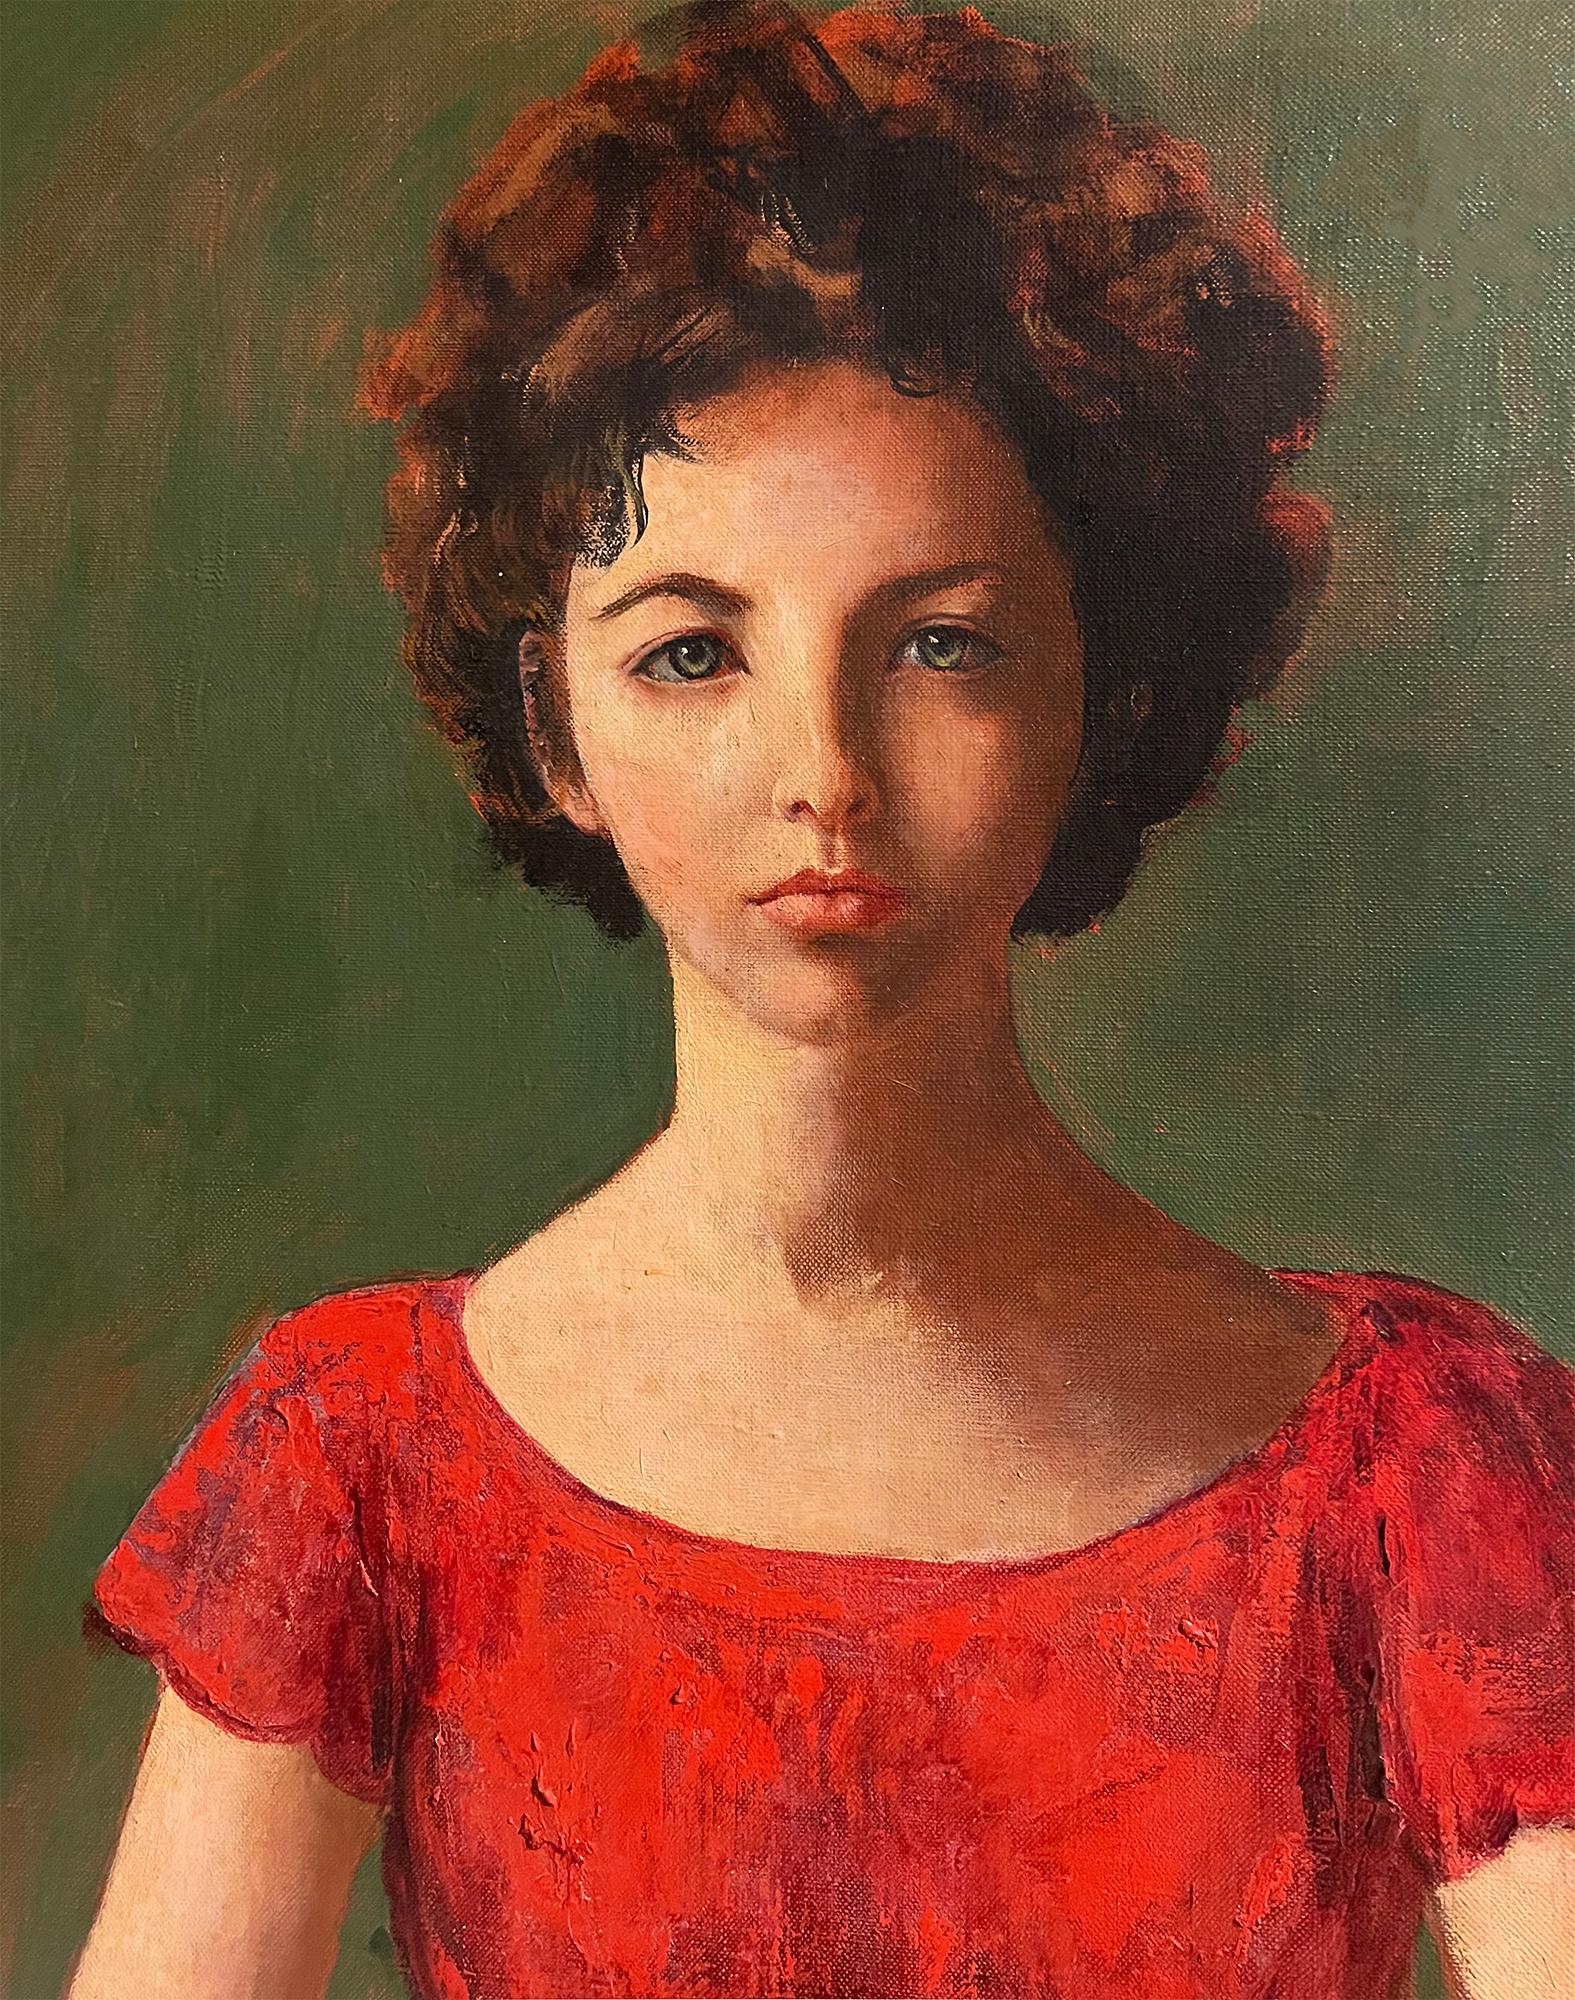 Woman in a Red Dress, Mid Century Female Illustrator/ Artist, Elizabeth Taylor ? For Sale 8